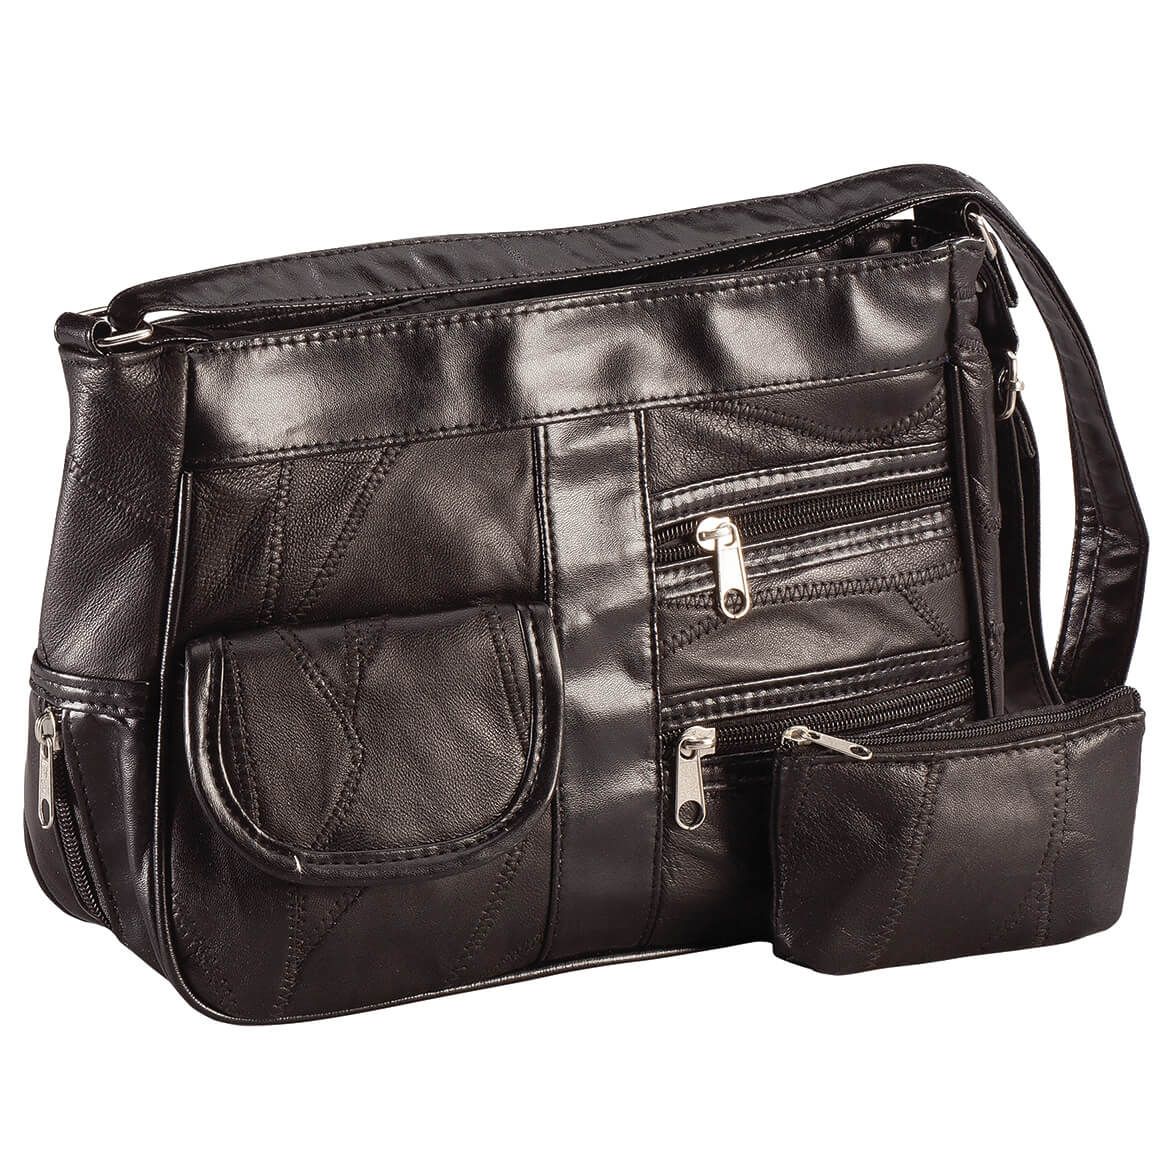 Lamb Leather Handbag, 2-Piece Set + '-' + 363214